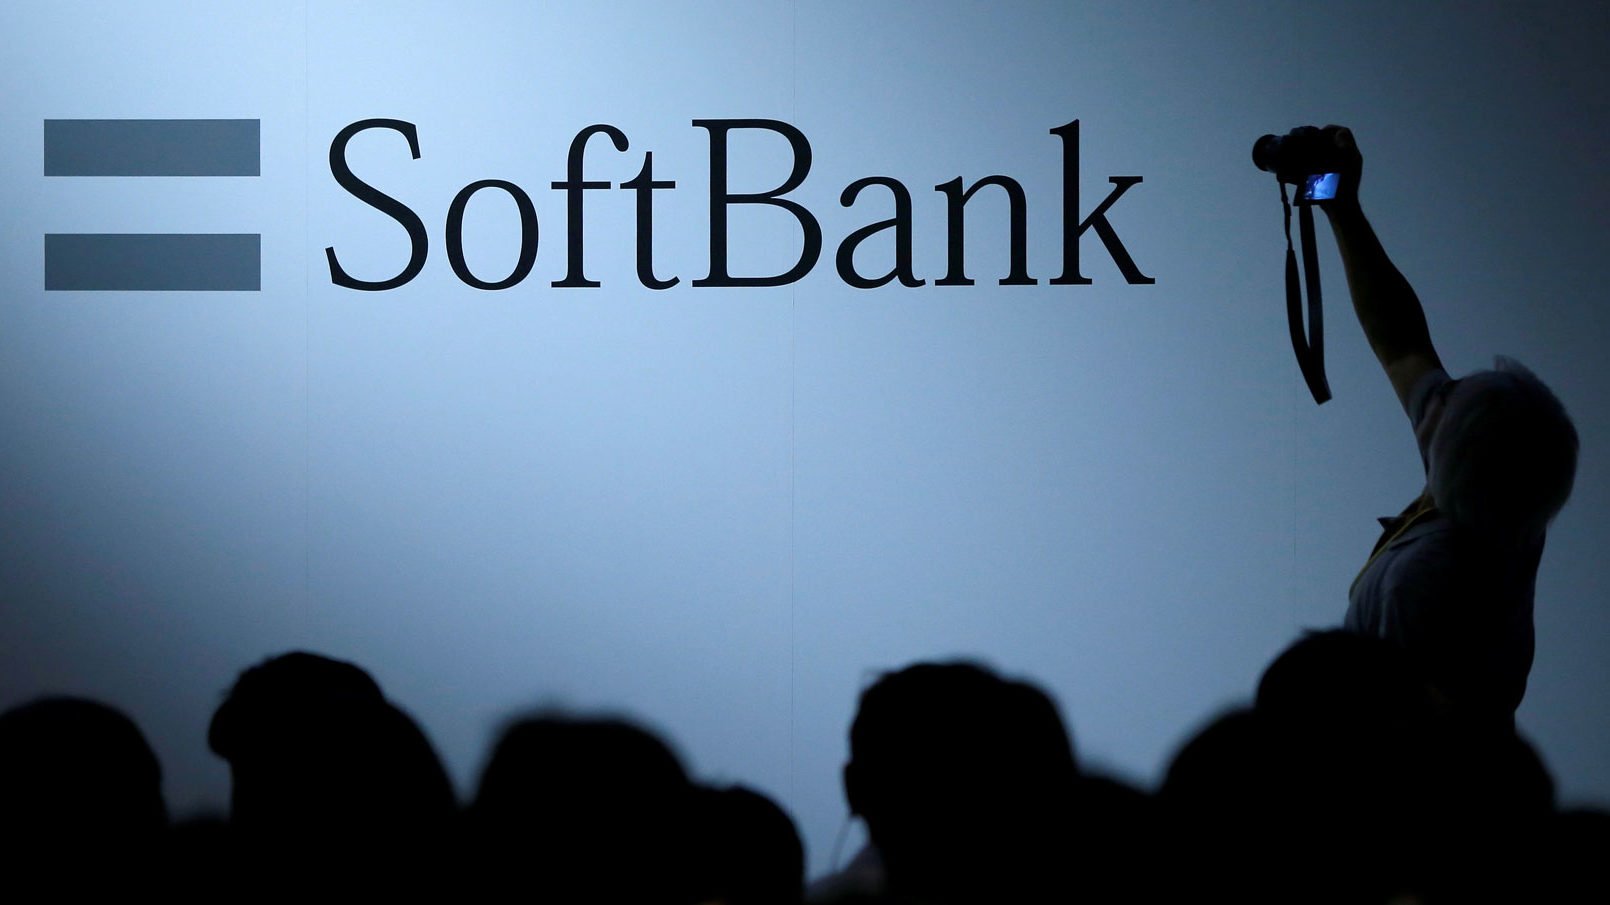 Softbank ganara 34,000 mdd alibaba